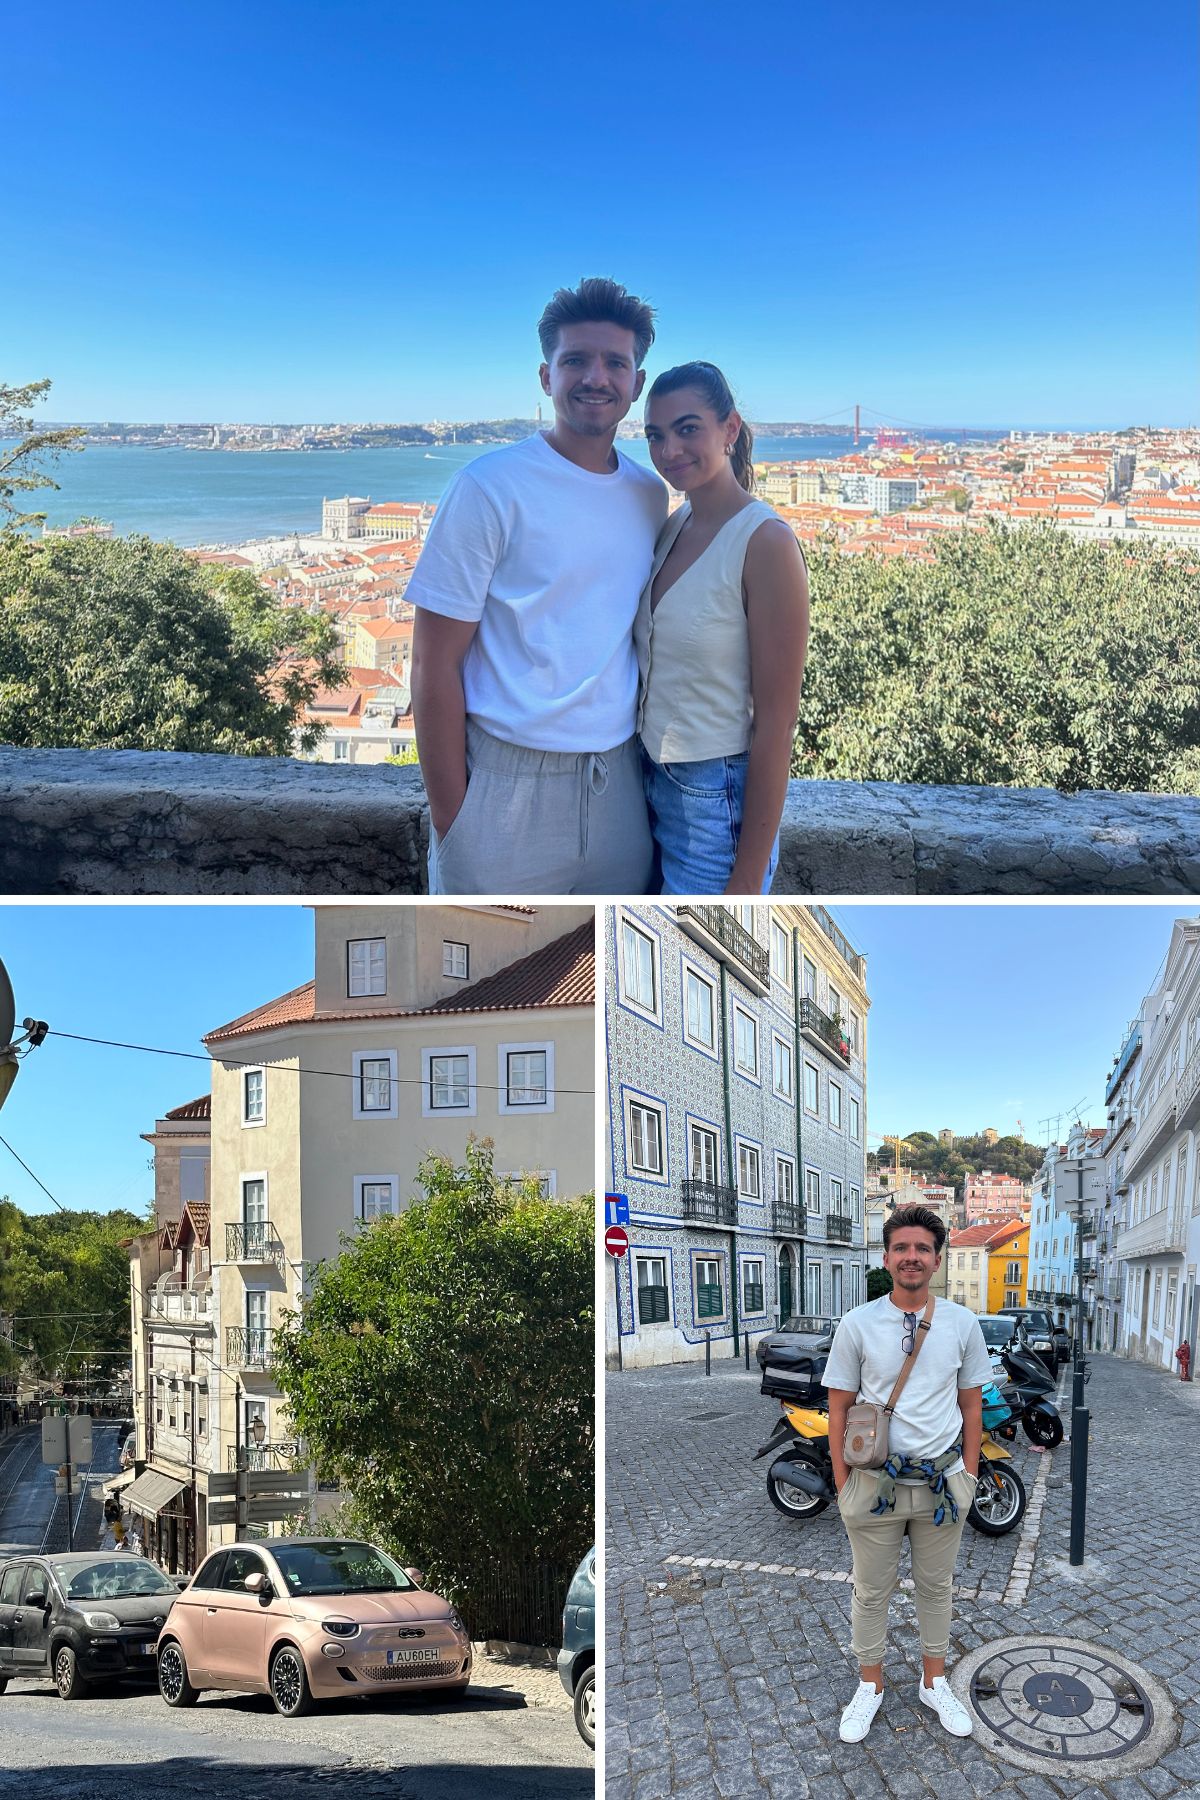 Photos in Lisbon, Portugal.